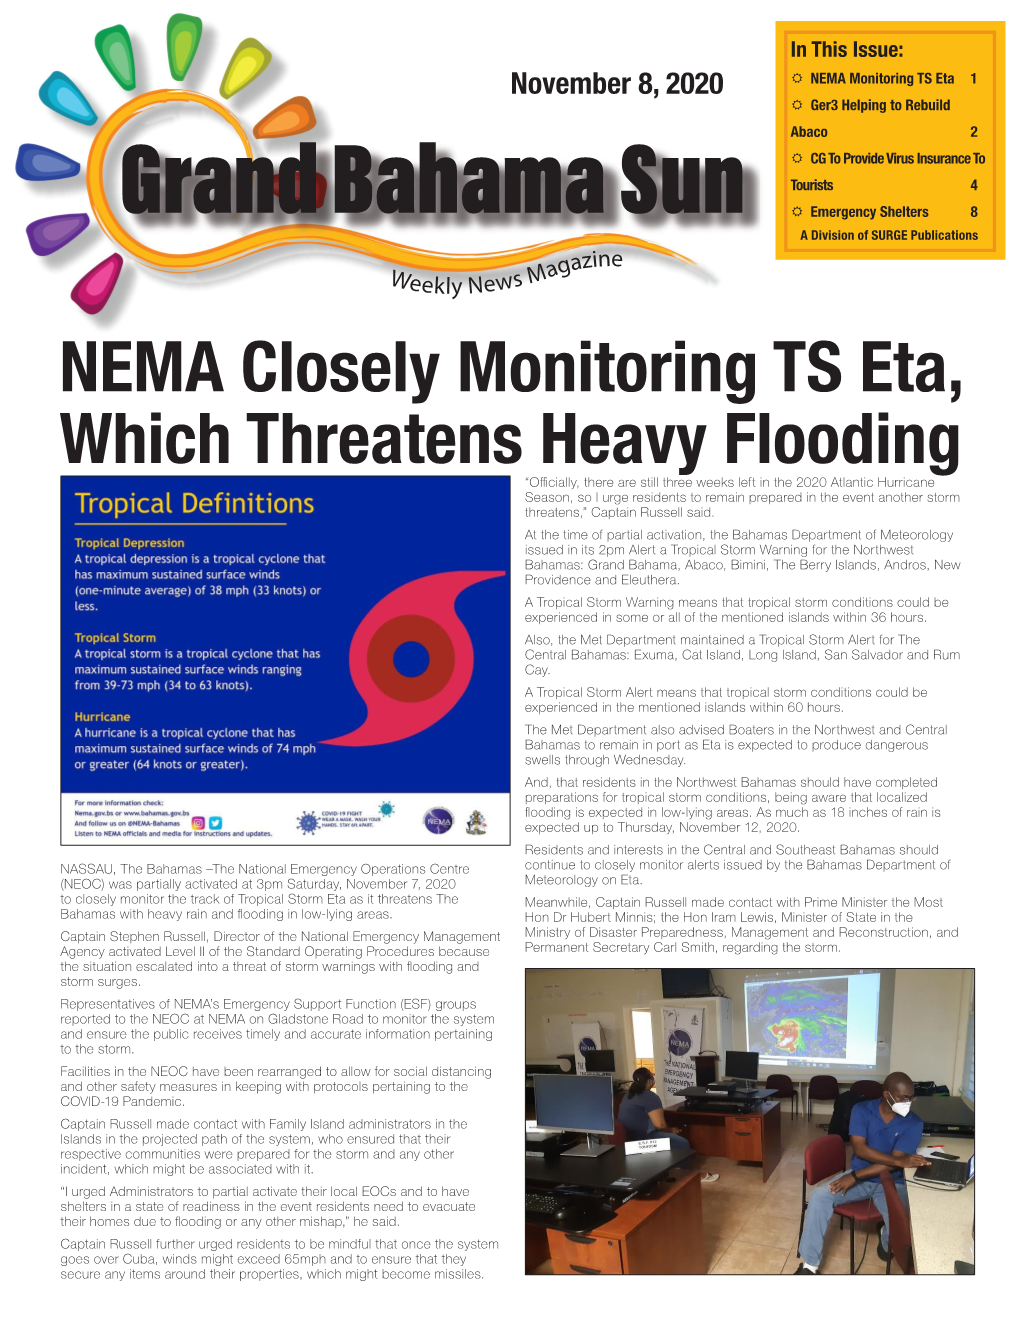 NEMA Closely Monitoring TS Eta, Which Threatens Heavy Flooding